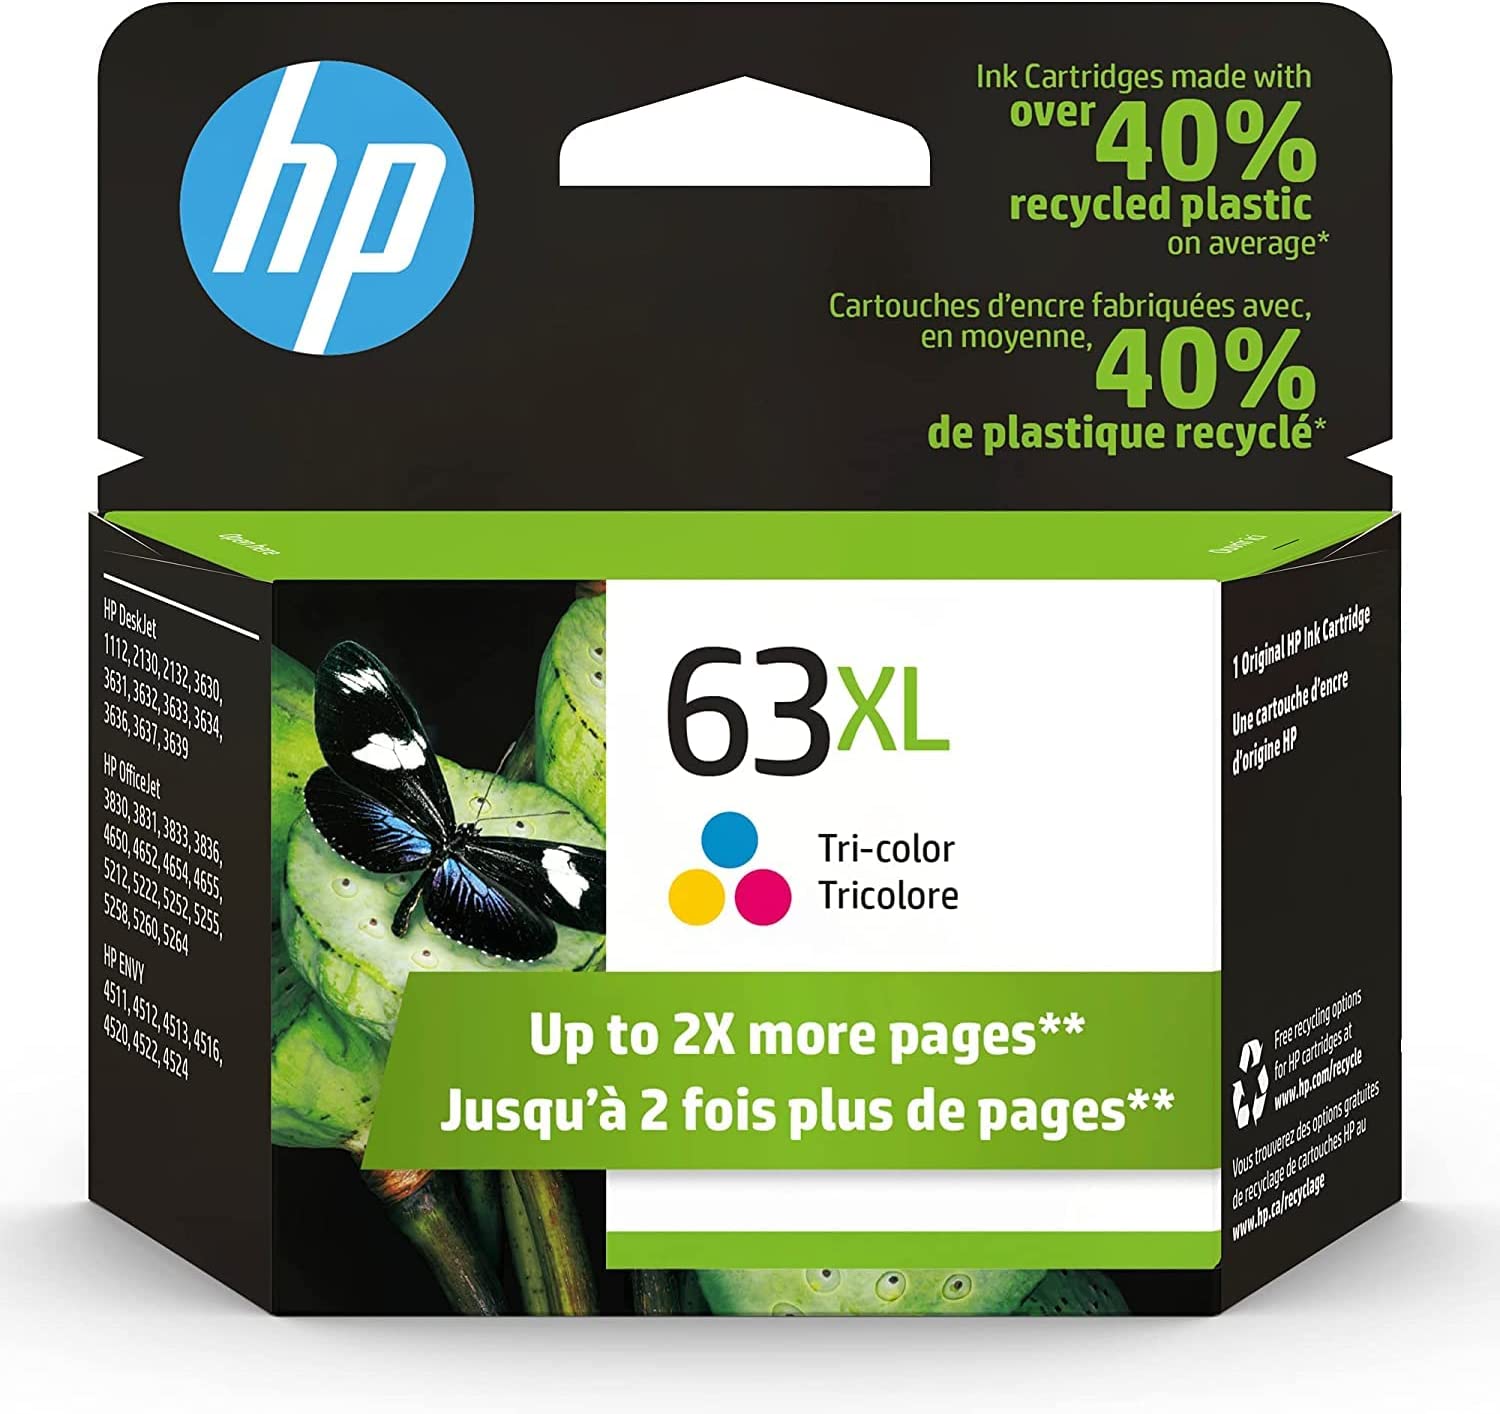 HP 63XL 3색 고수익 잉크 | HP DeskJet 1112, 2130, 3630 시리즈, HP ENVY 4510, 4520 시리즈, HP OfficeJet 3830, 4650, 5200 시리즈 | 인스턴트 잉크 대상 | F6U63AN